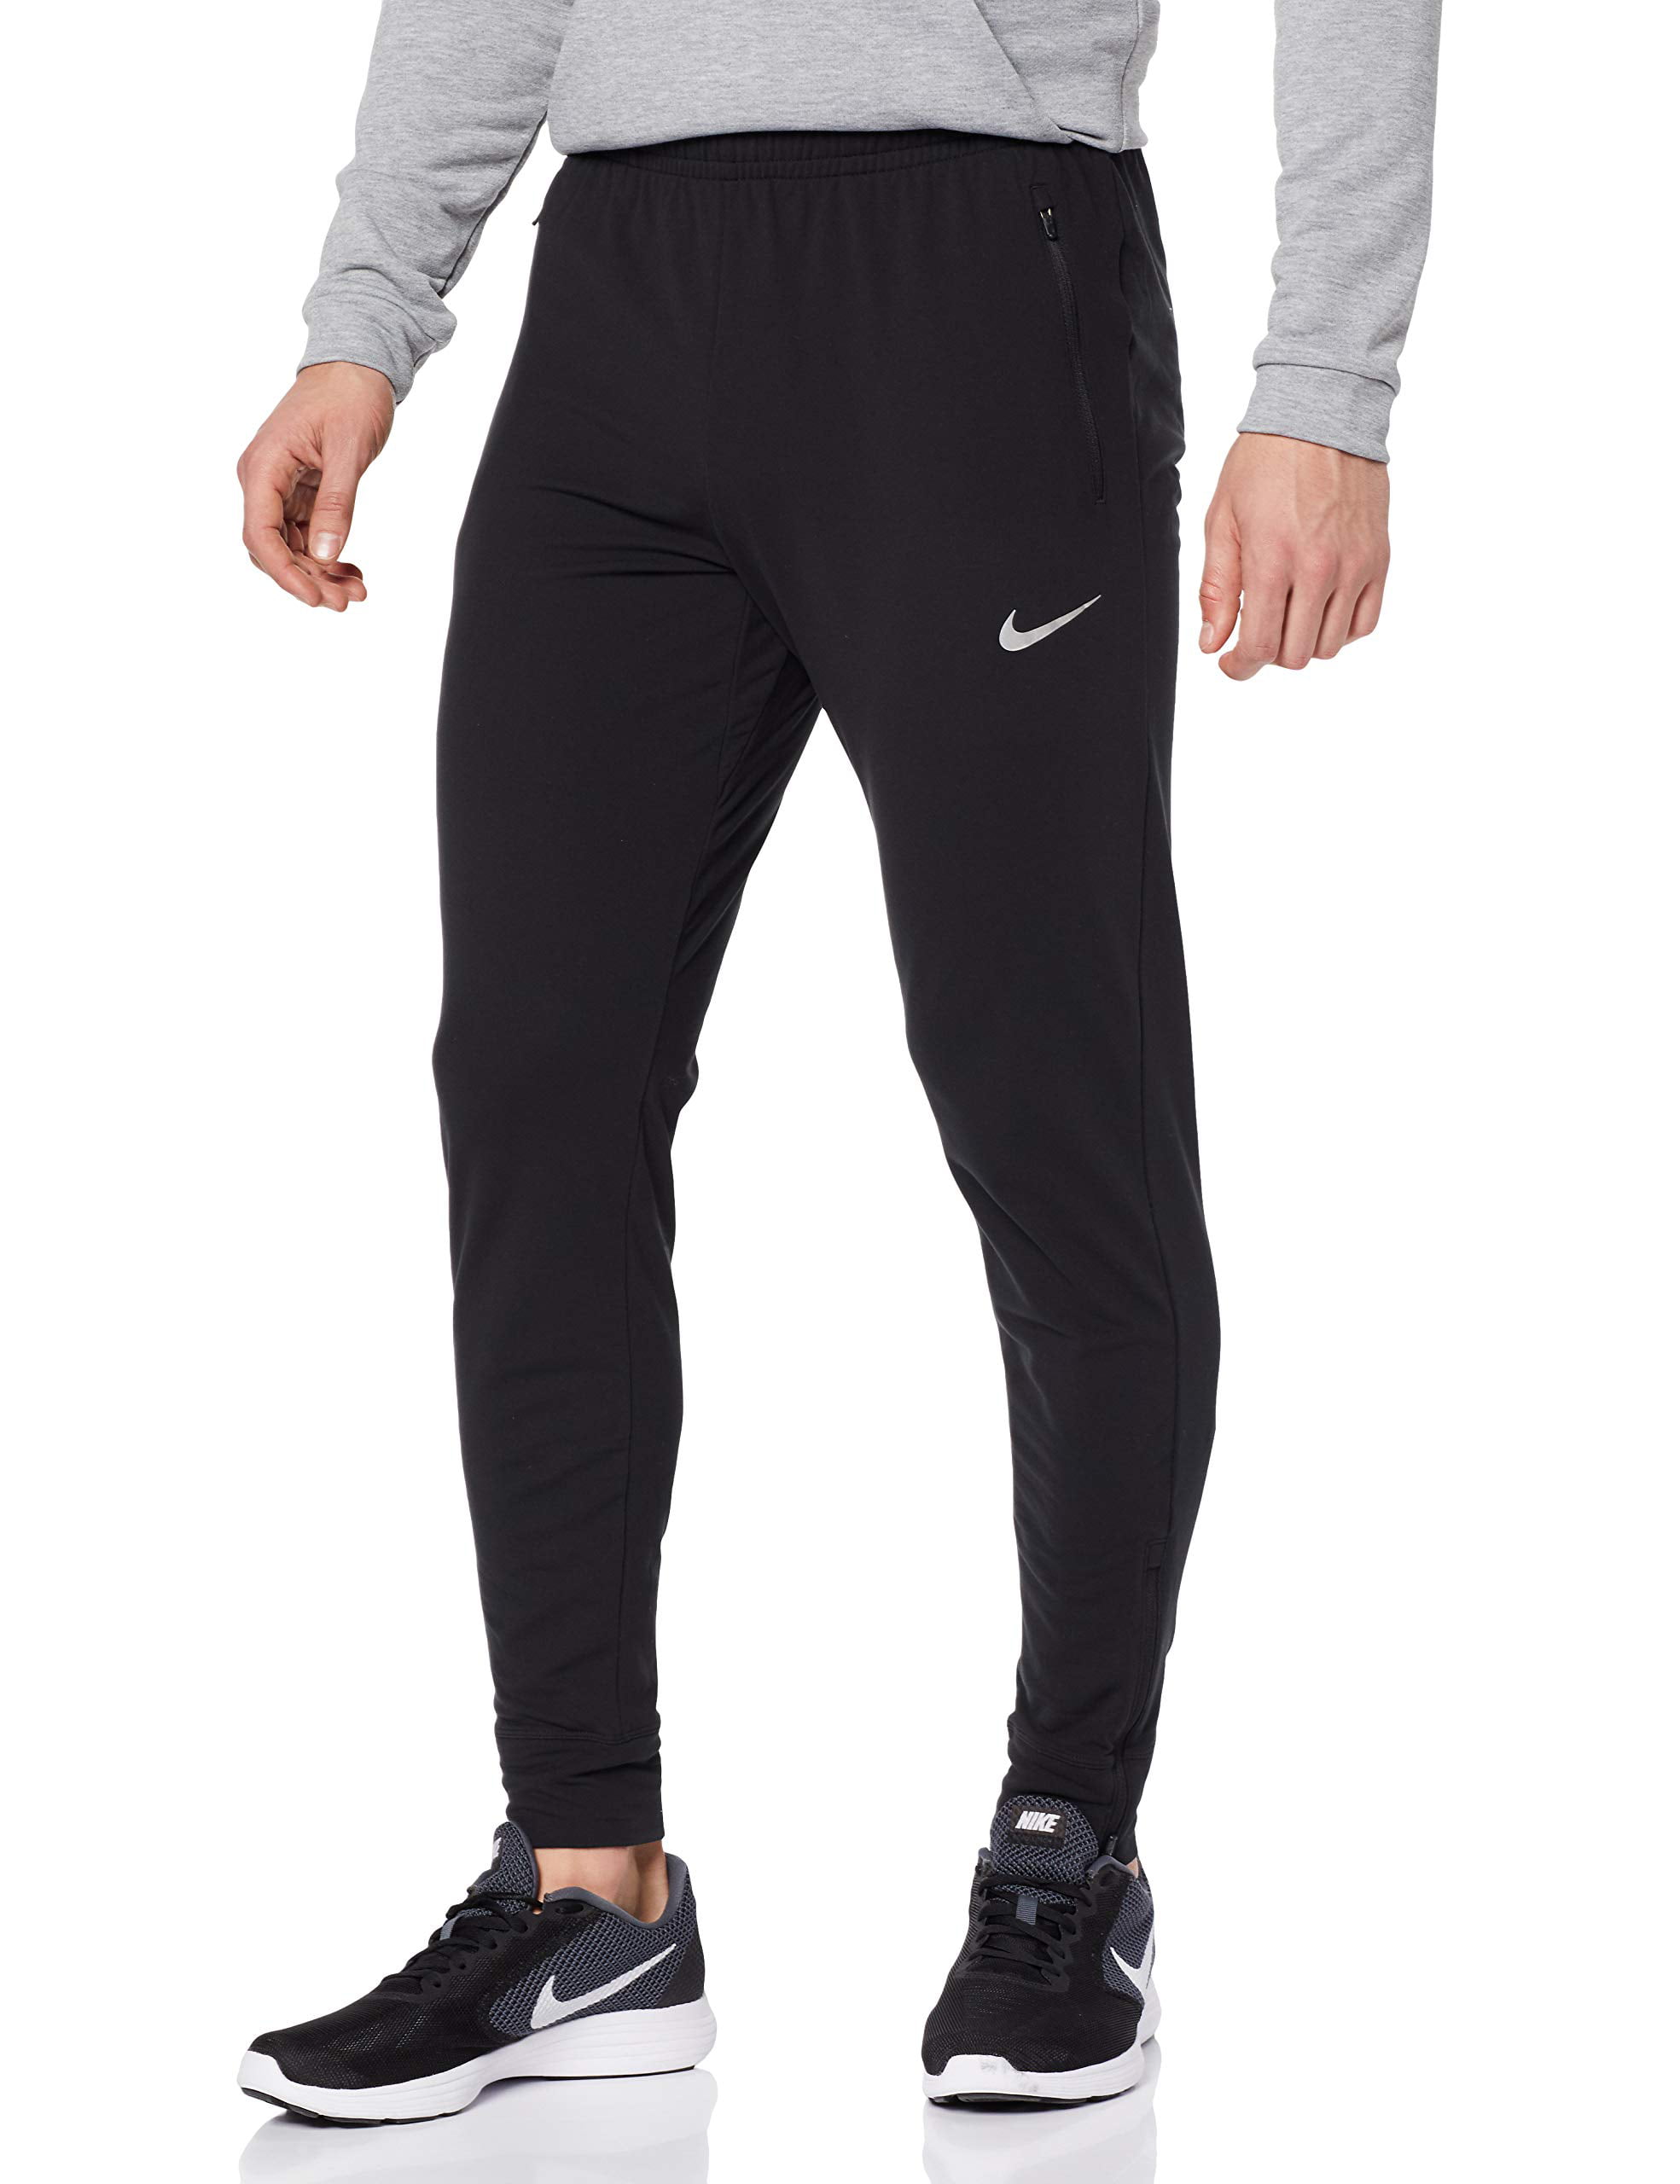 Nike - Mens Large Therma Running Jogging Stretch Pants L - Walmart.com ...